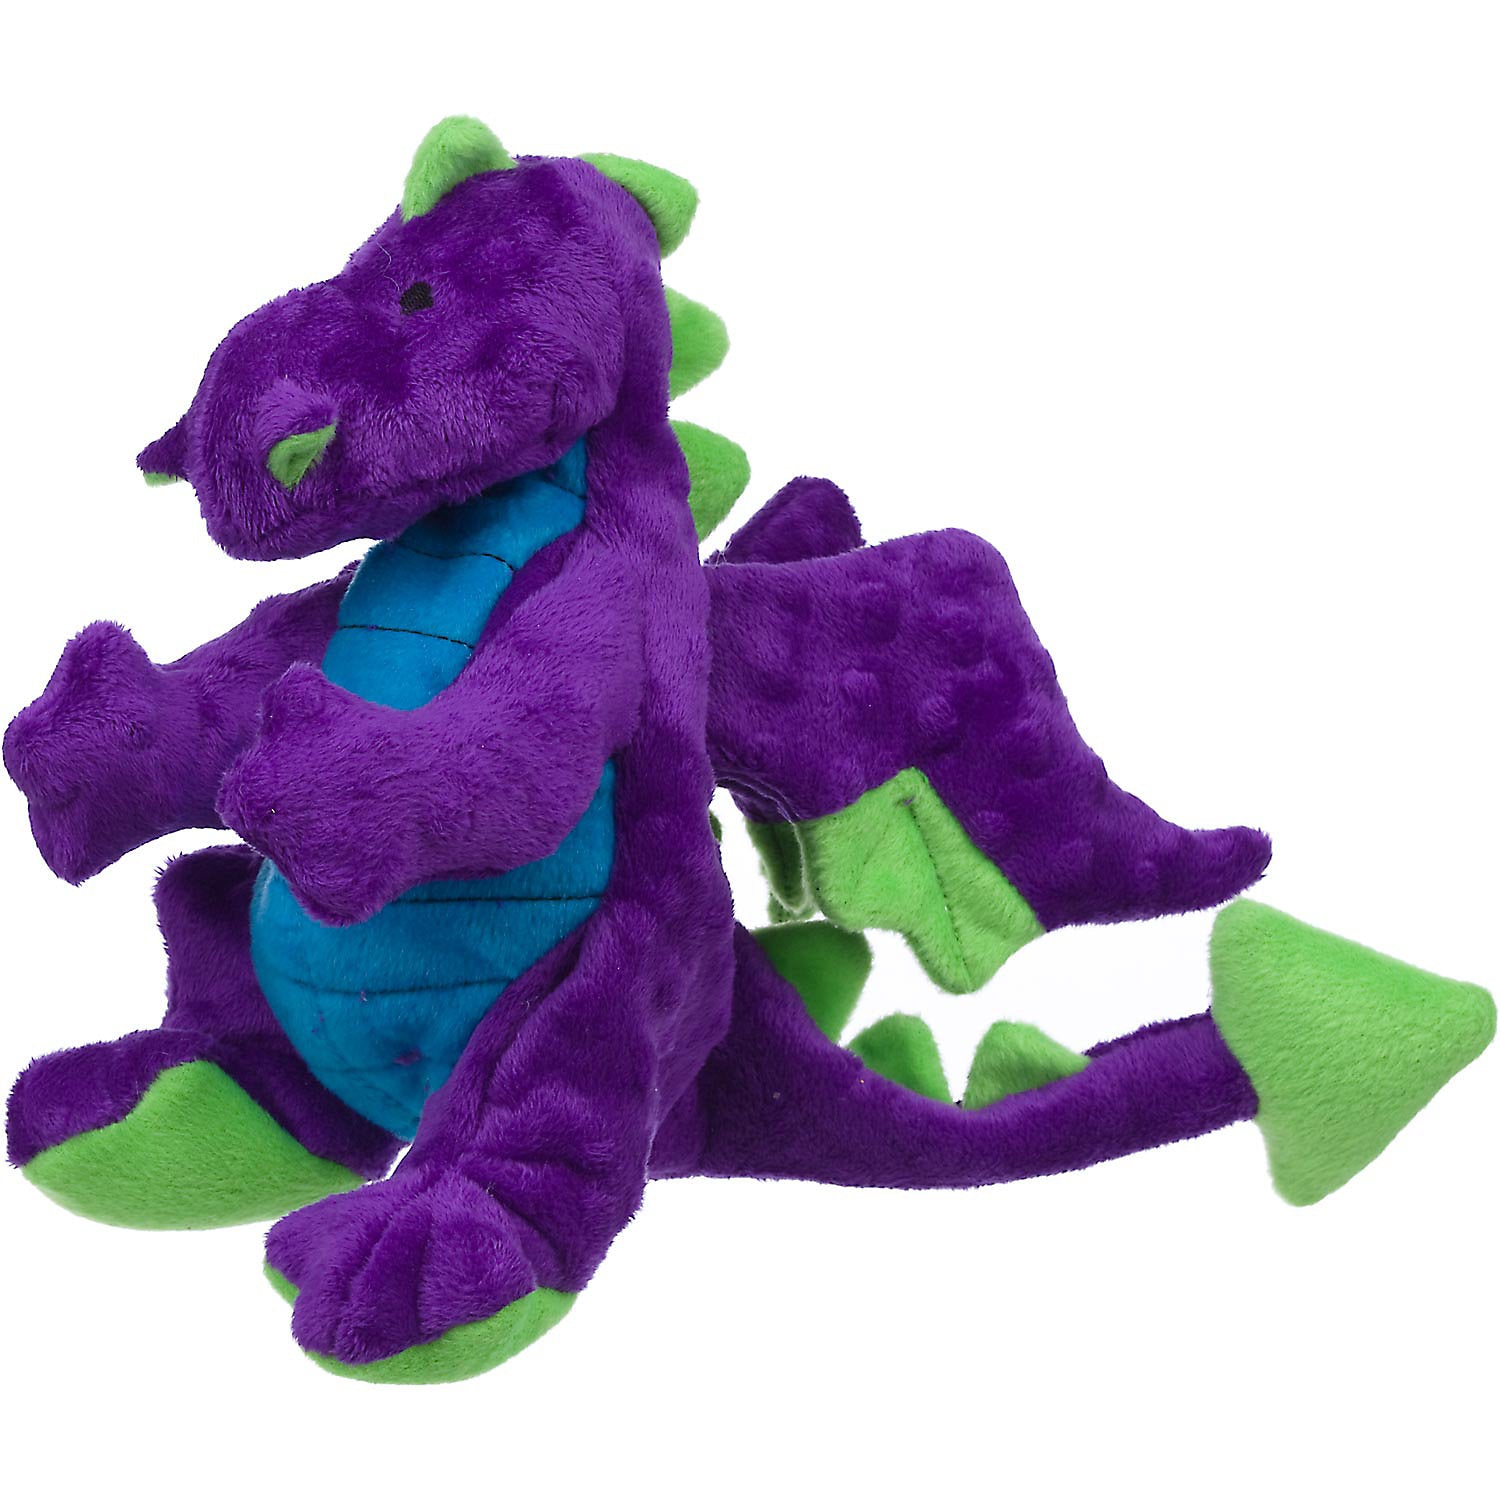 goDog Dragon Durable Squeaky Plush Dog Toy, Small Purple